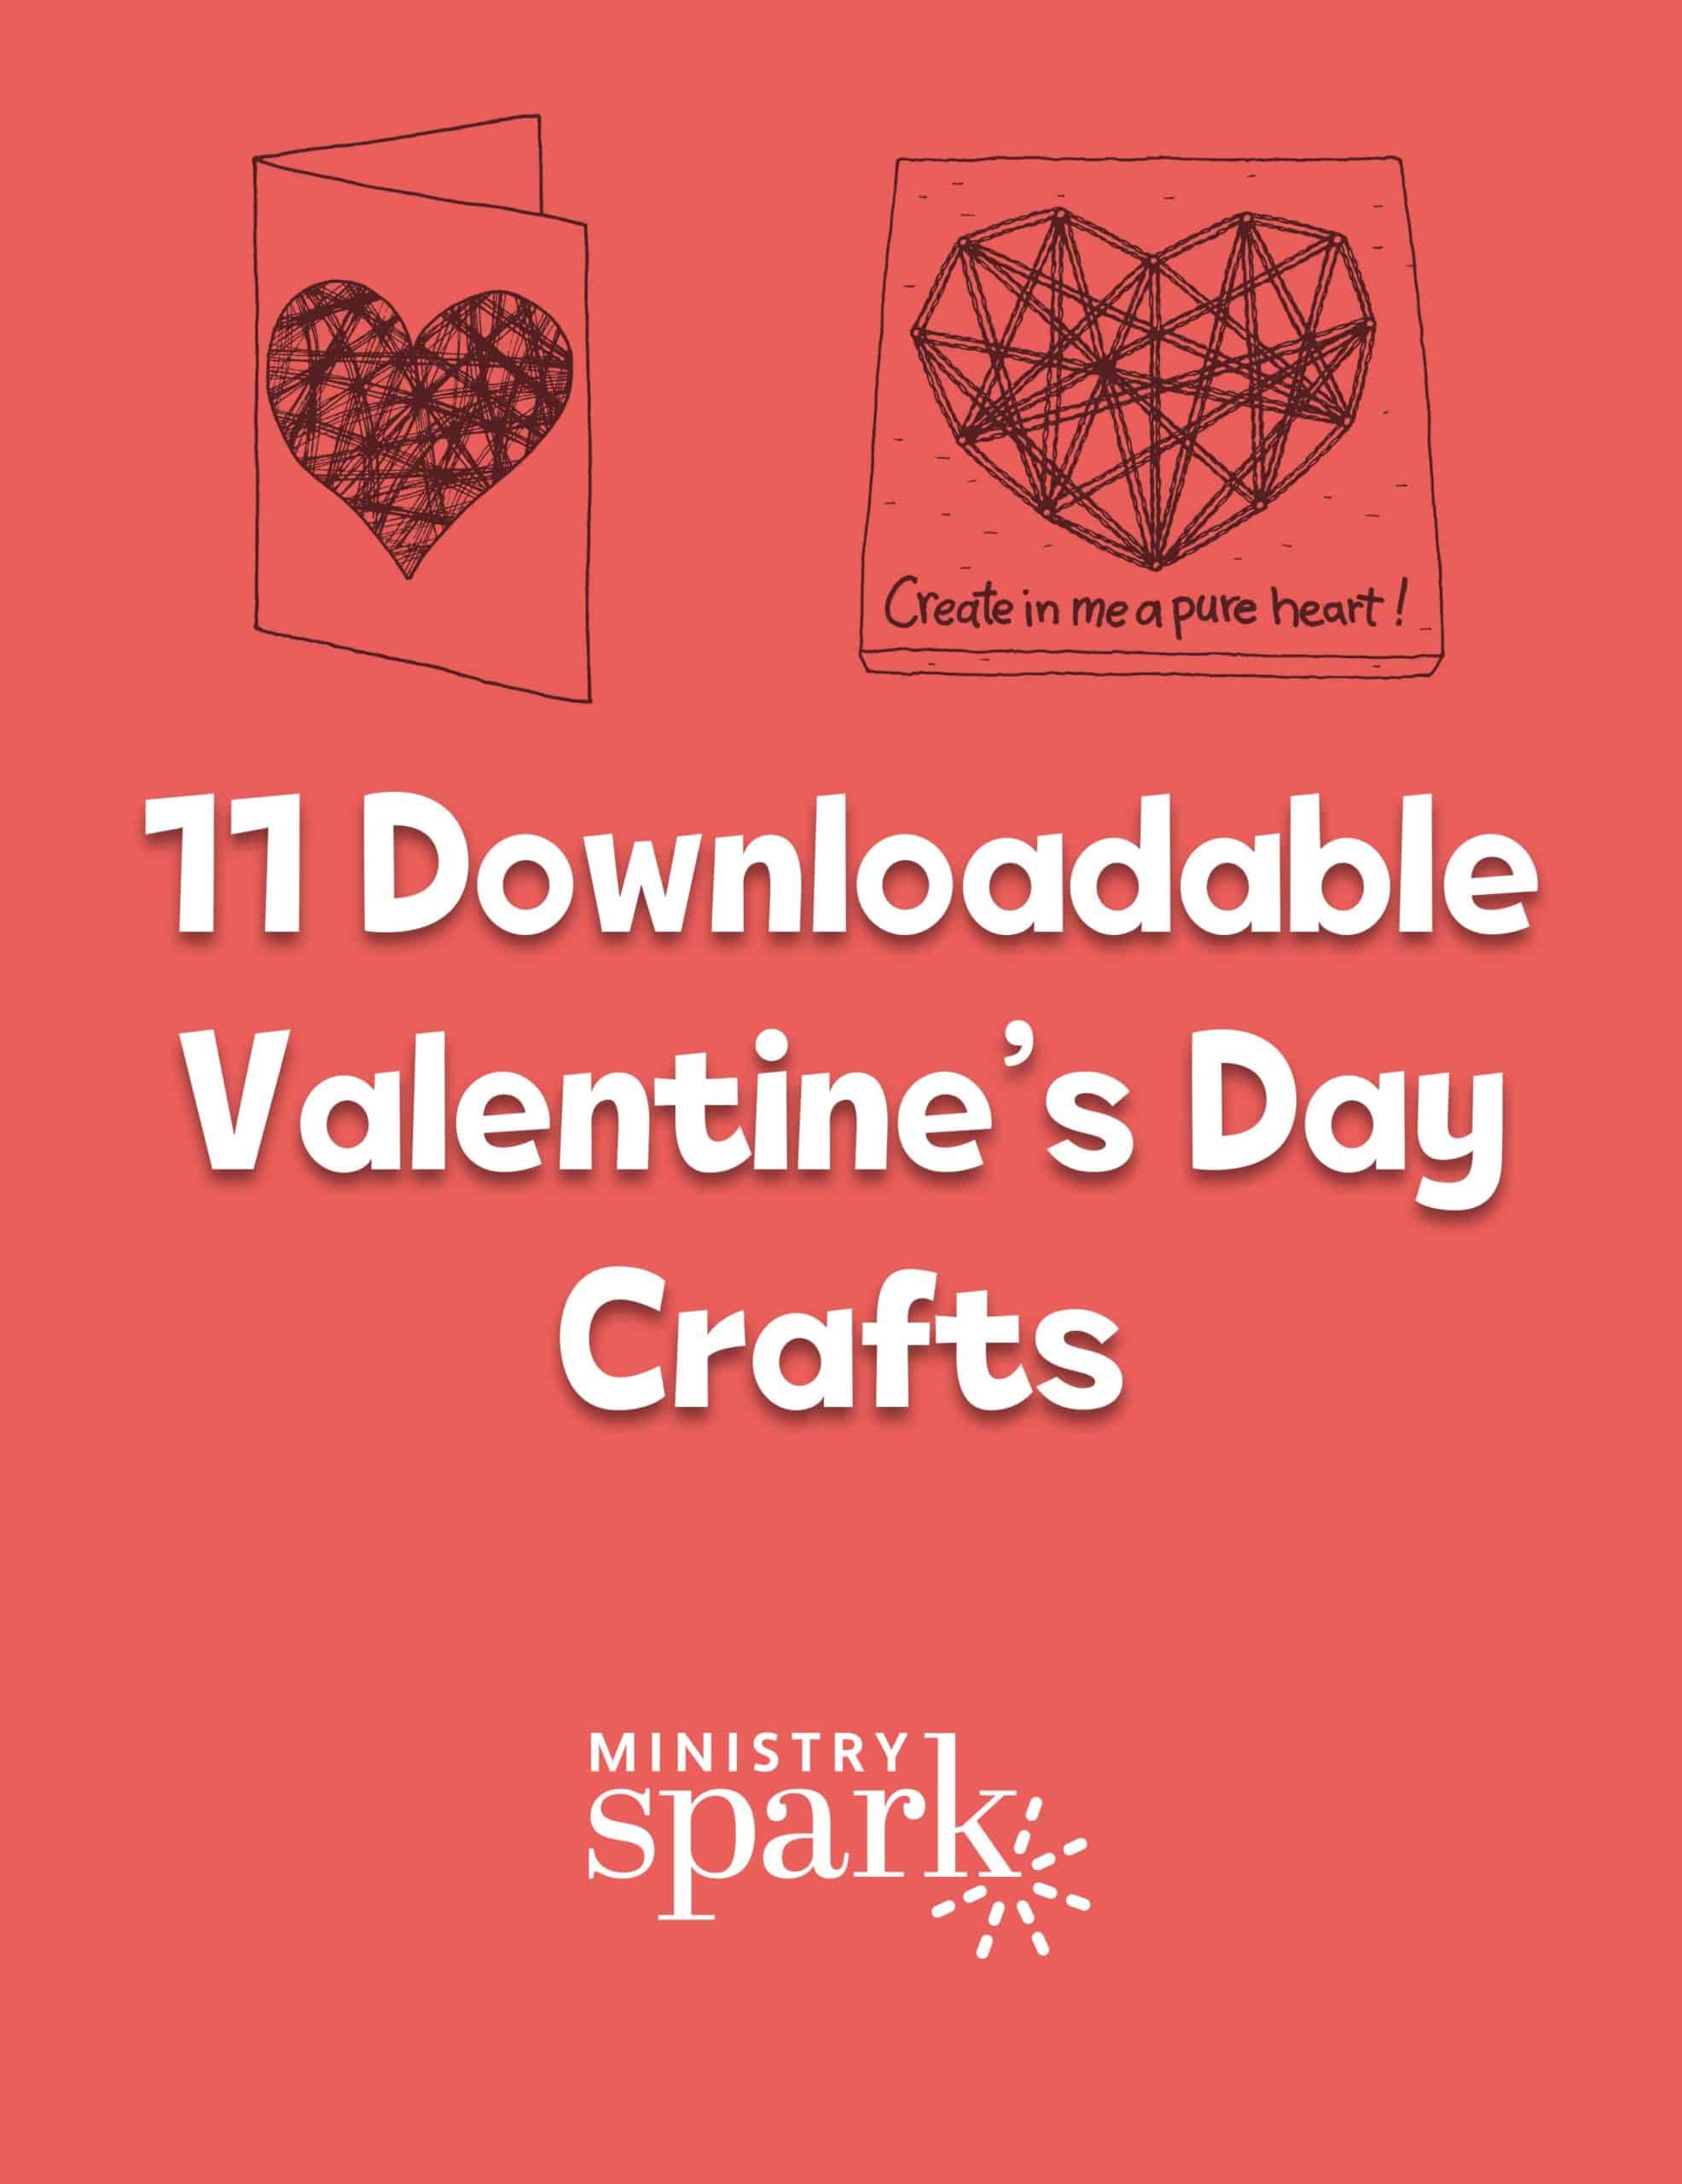 11 Downloadable Valentines Crafts